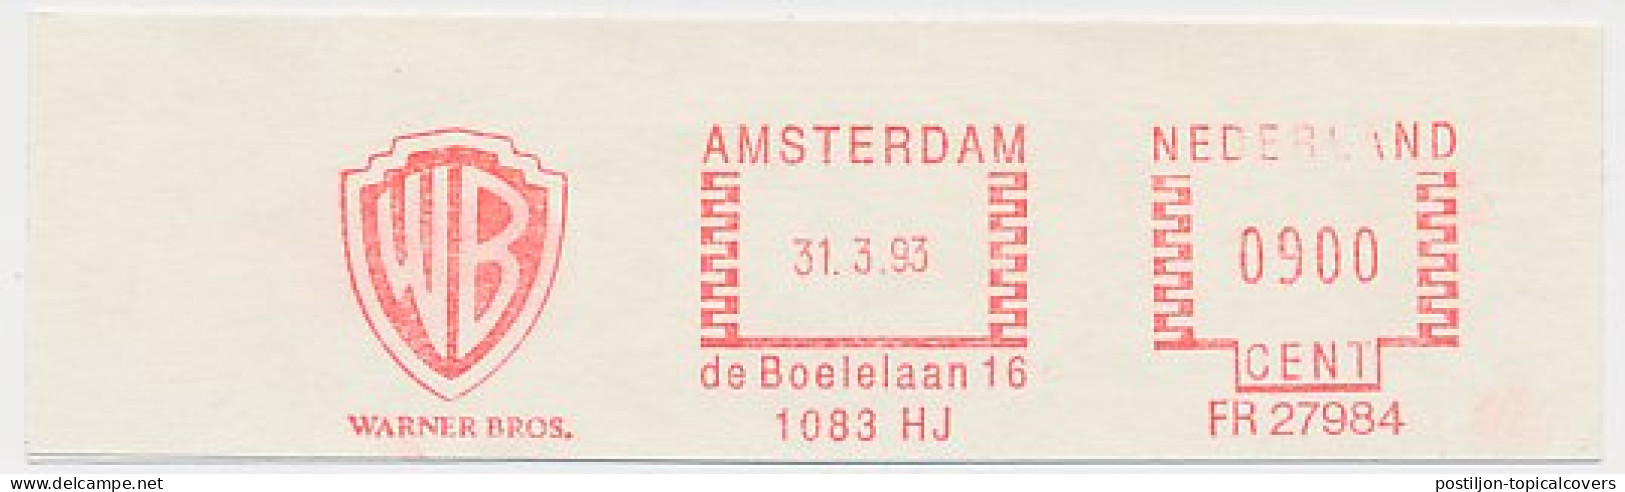 Meter Cut Netherlands 1993 - Frama 27984 Warner Bros. - Kino